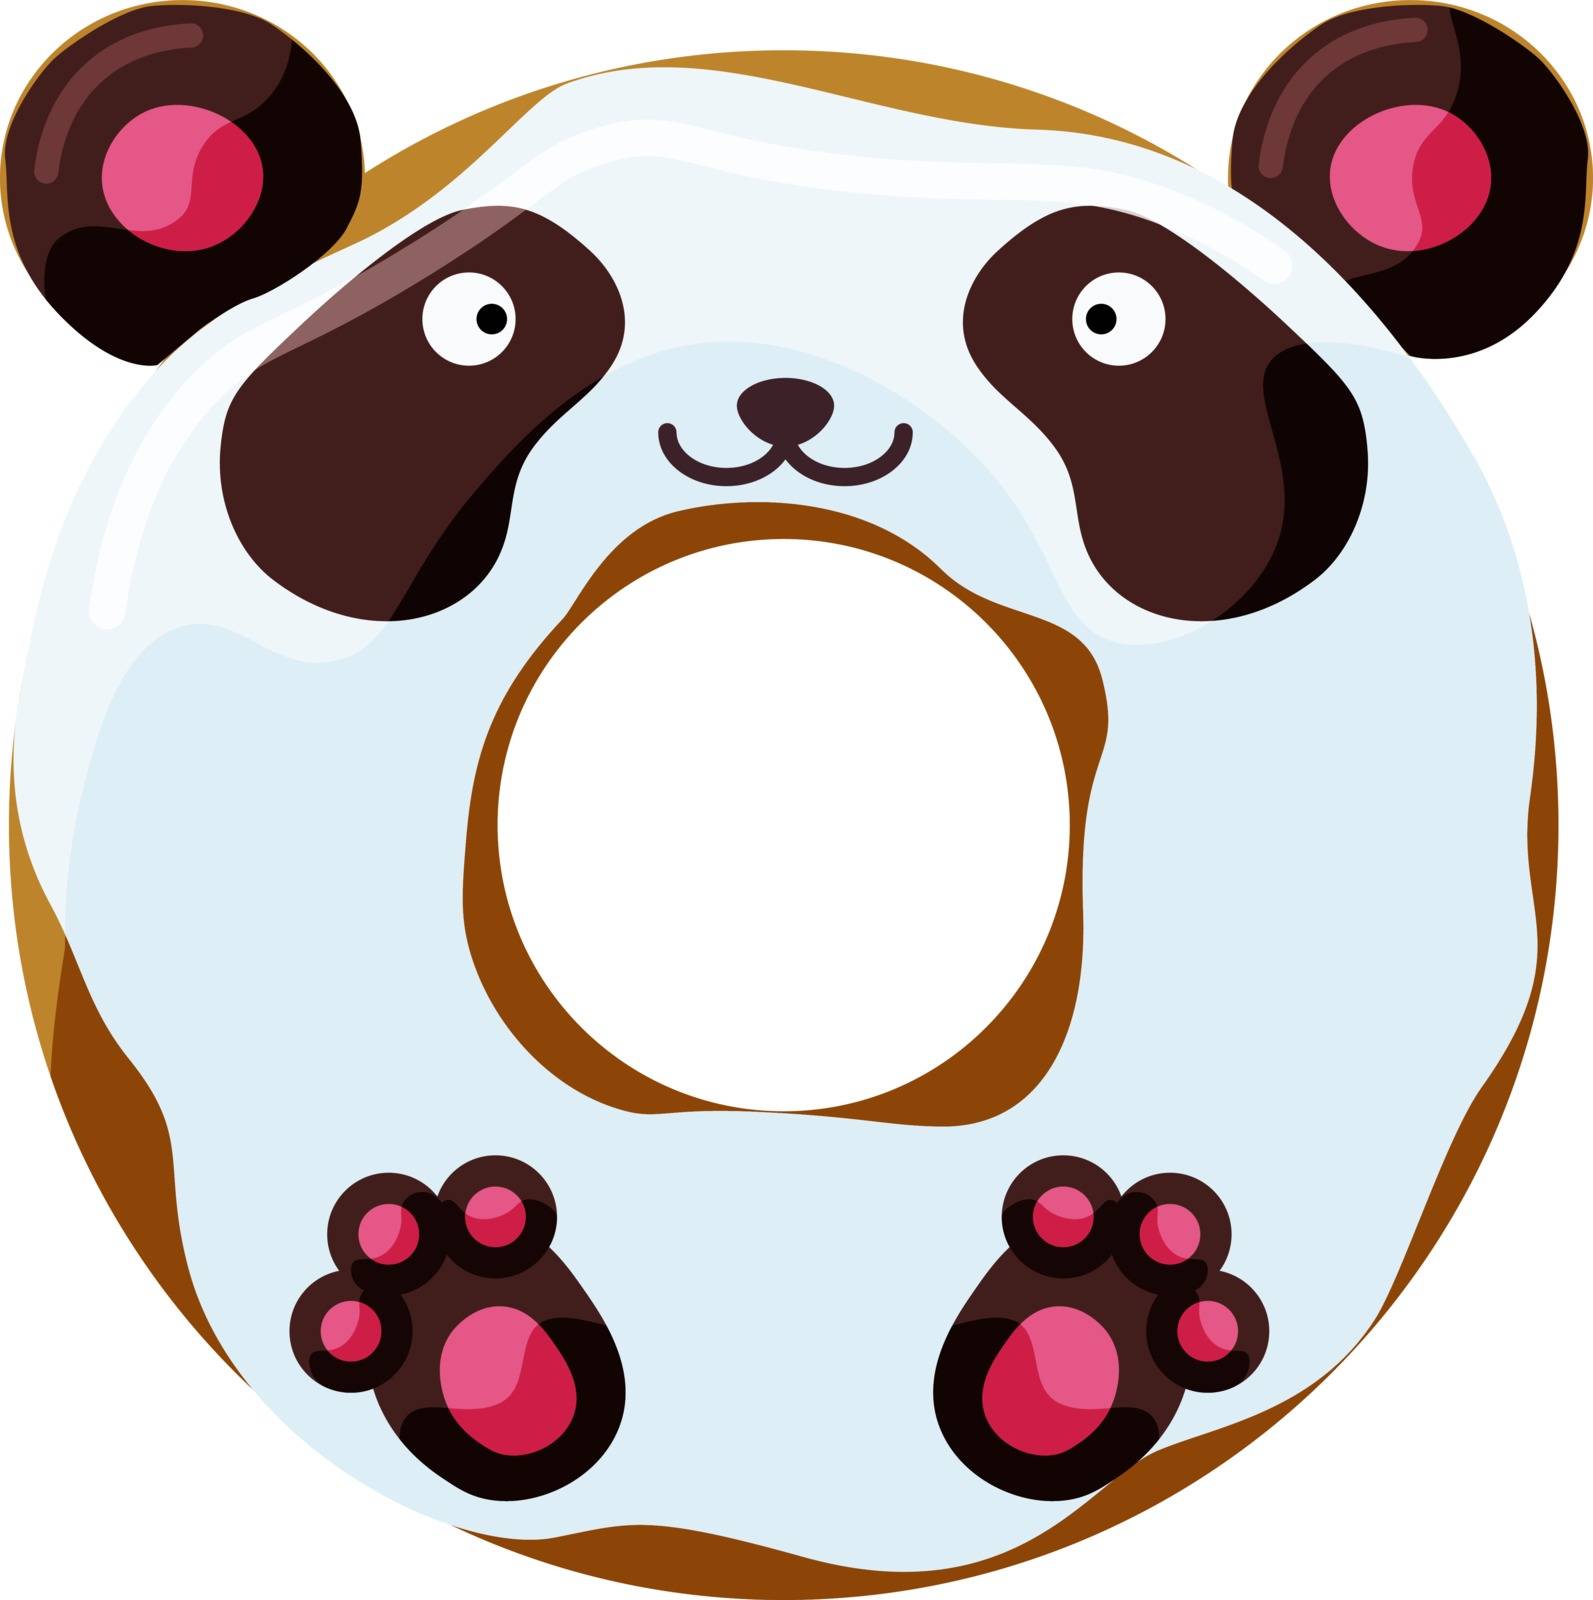 Cute panda donut vector illustration by Melnyk